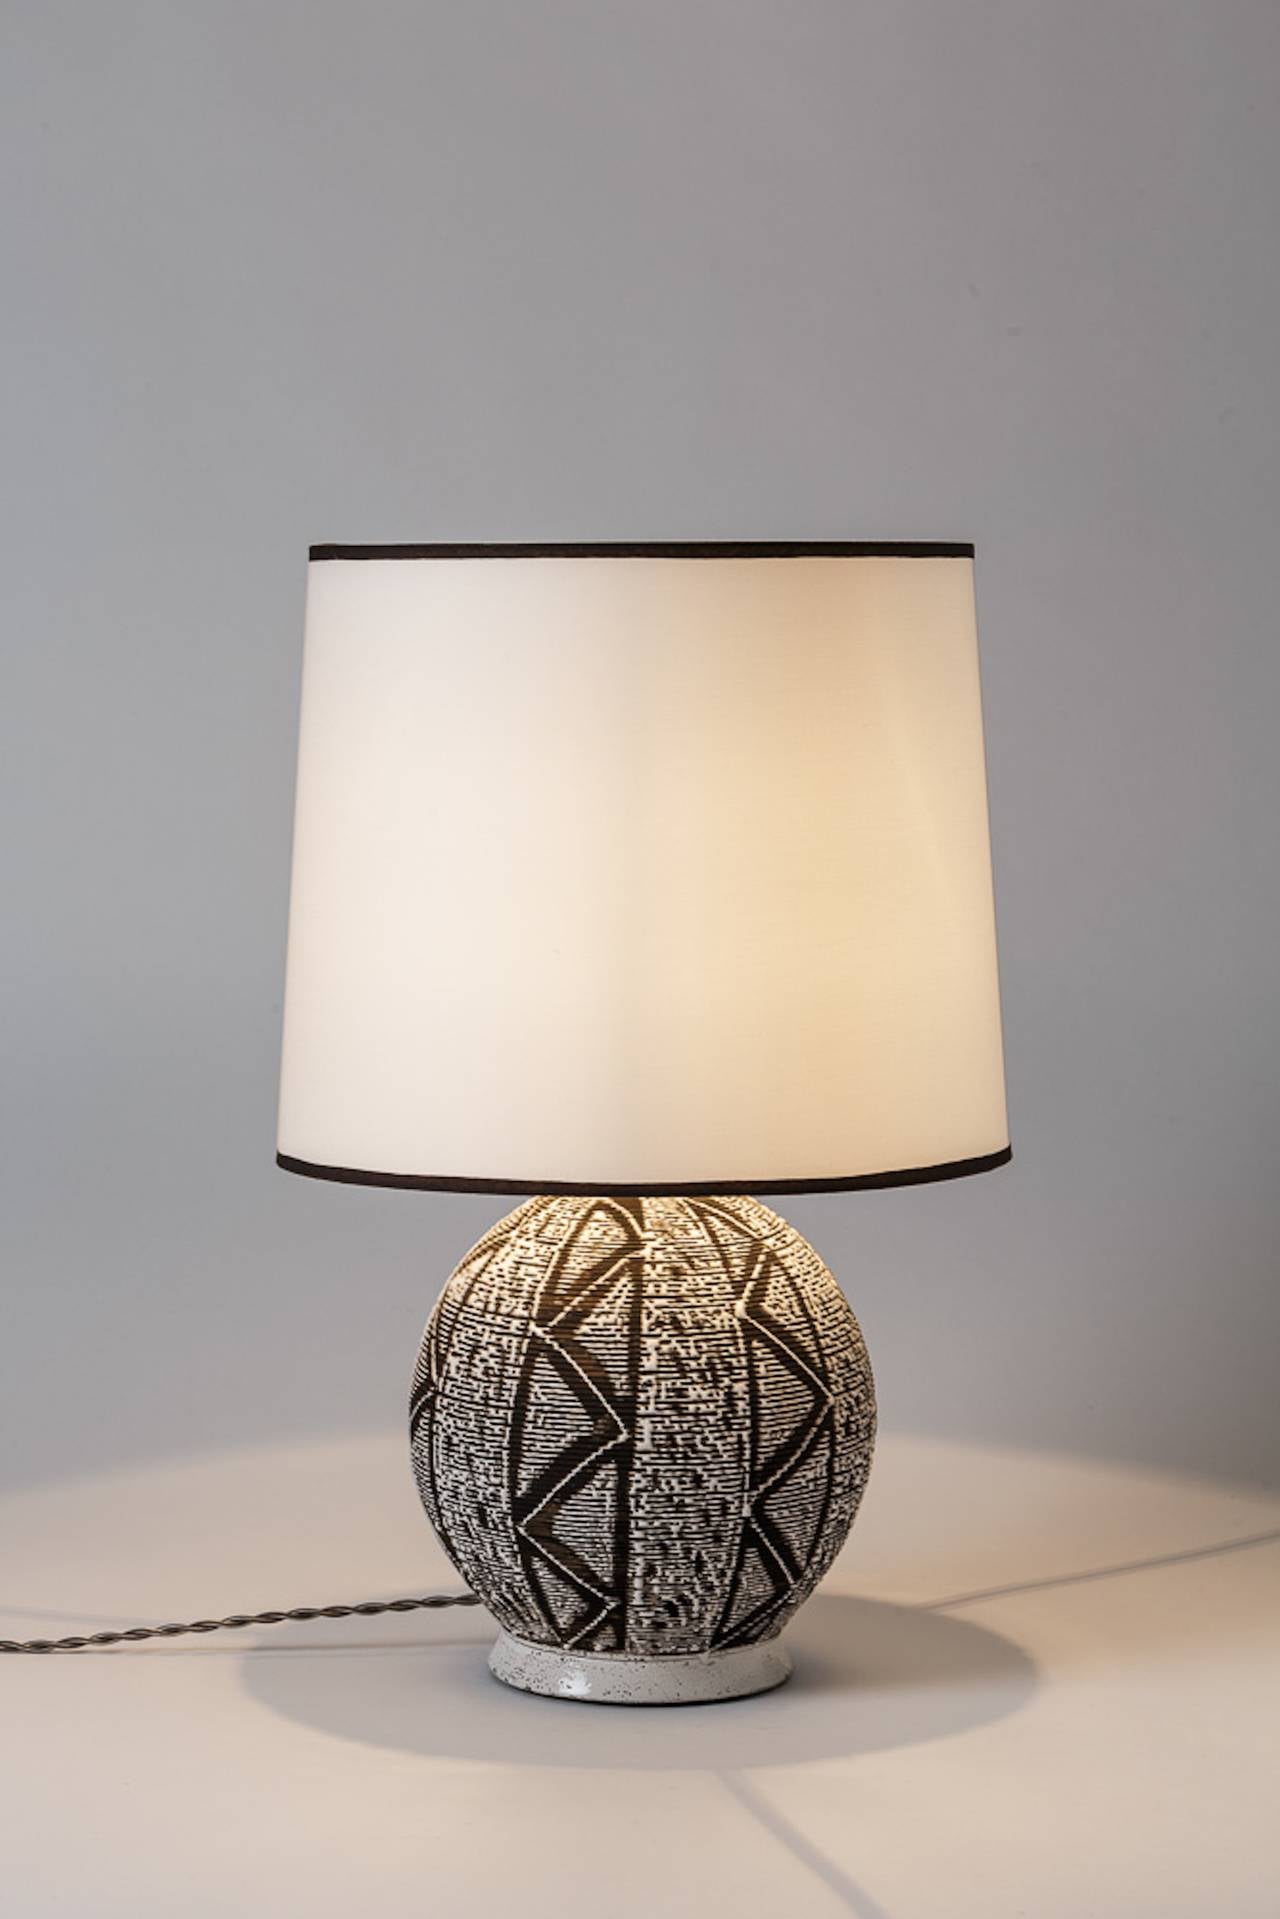 Beaux Arts Interesting Africanist Ceramic Lamp, circa 1930-1940, Attributed to Primavera